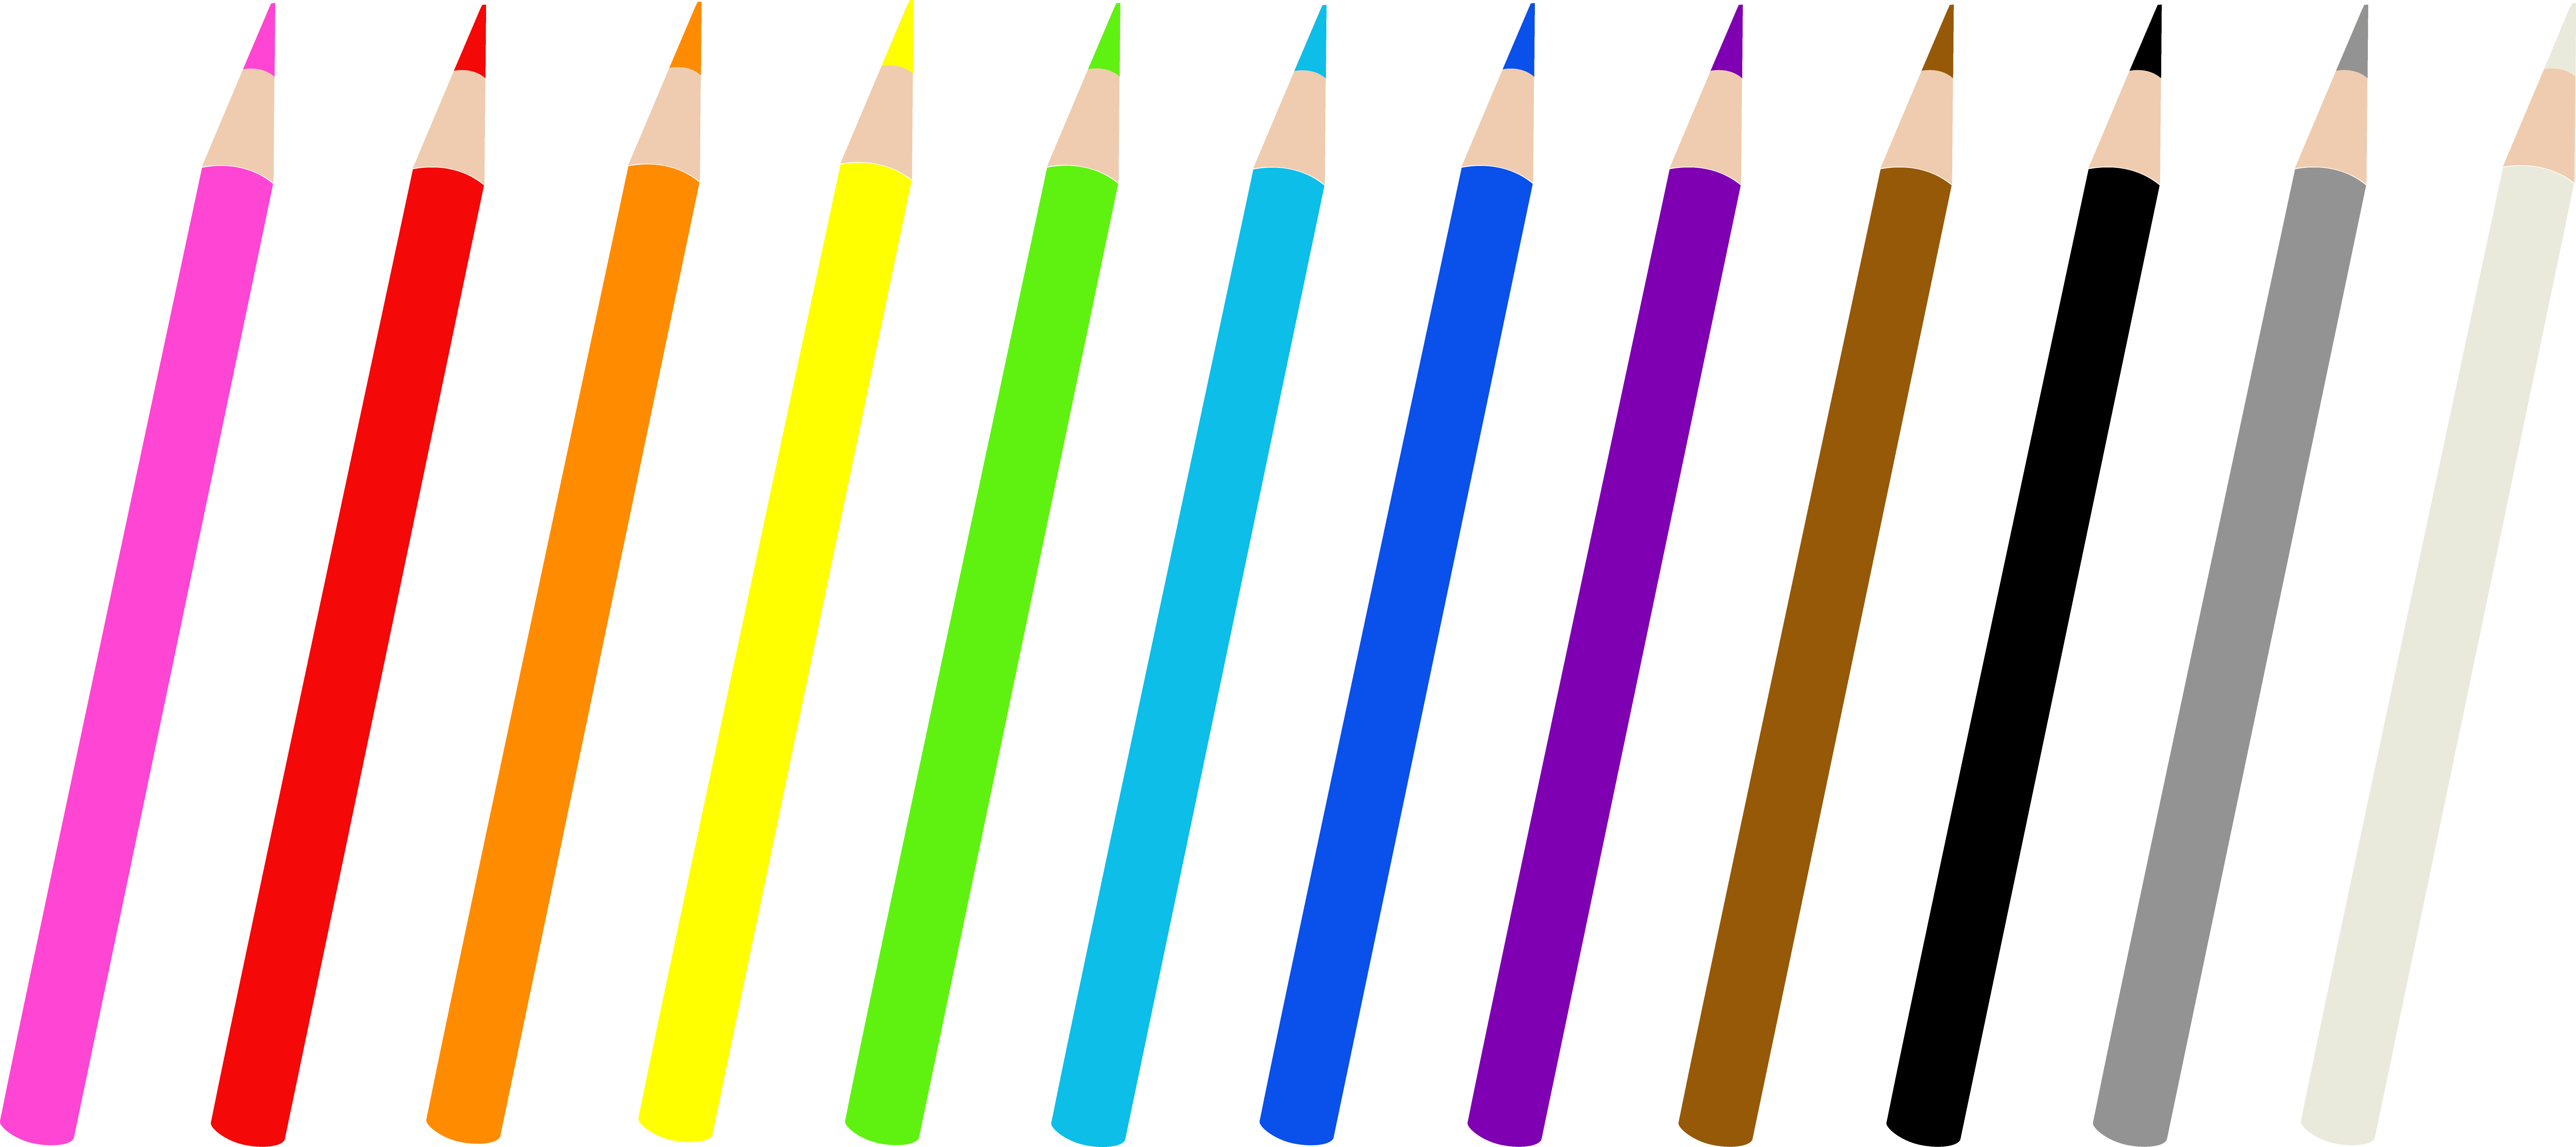 Crayons clipart colouring crayon. Color pencil art yahoo